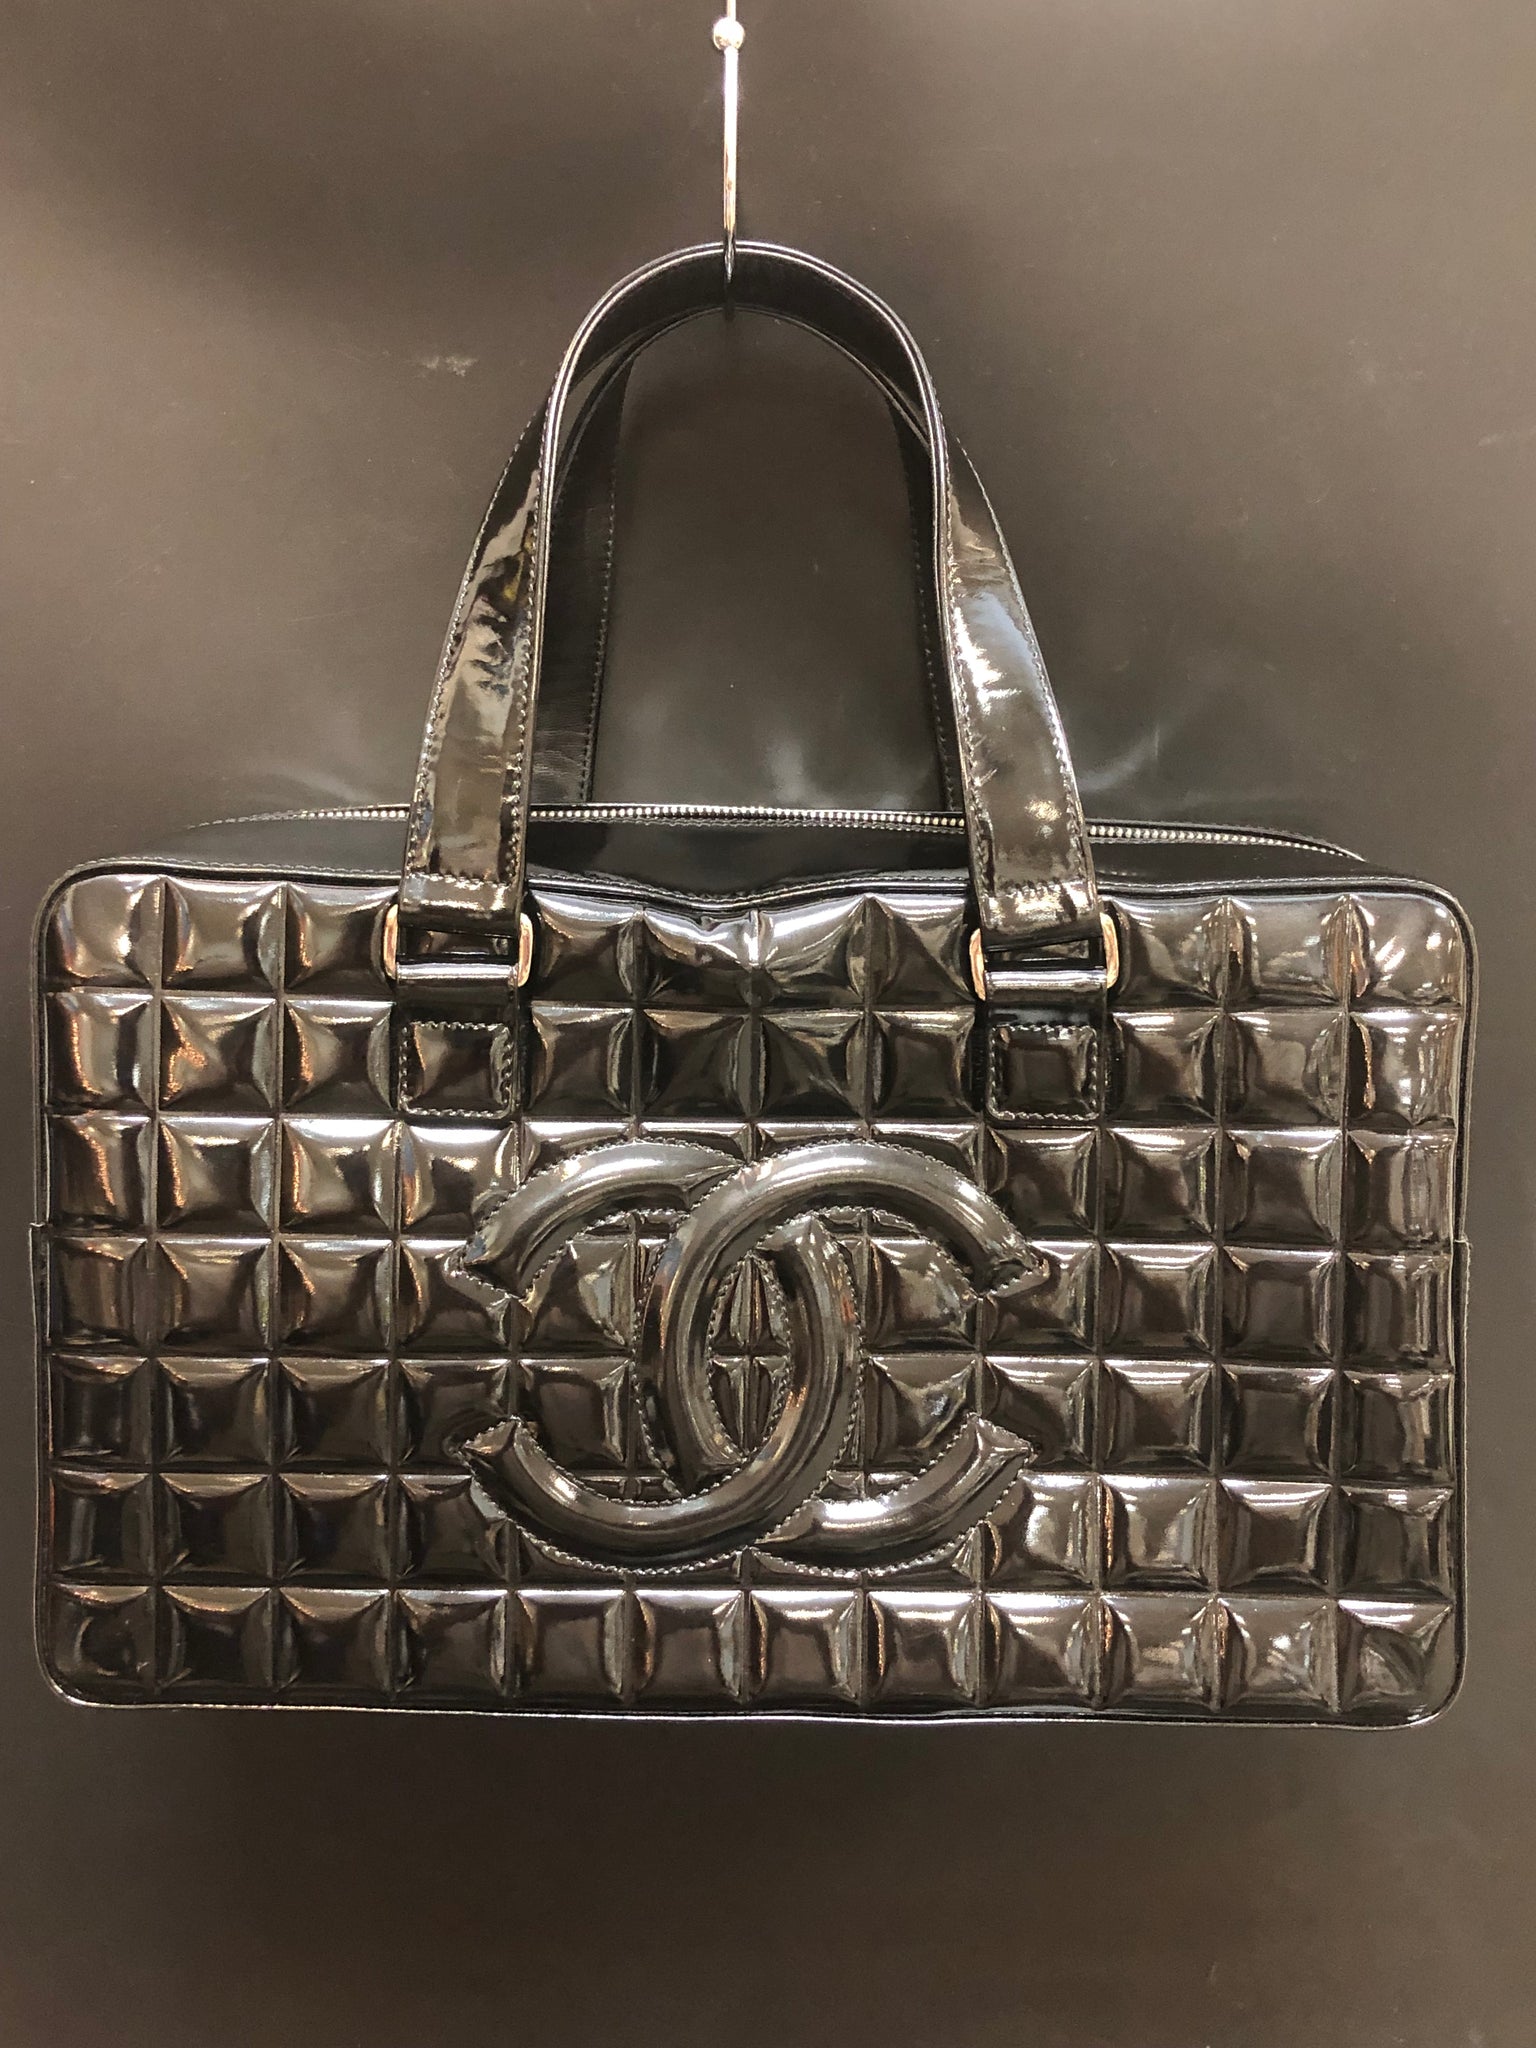 Sold at Auction: Chanel Mini Chocolate Bar Patent Trim Handbag